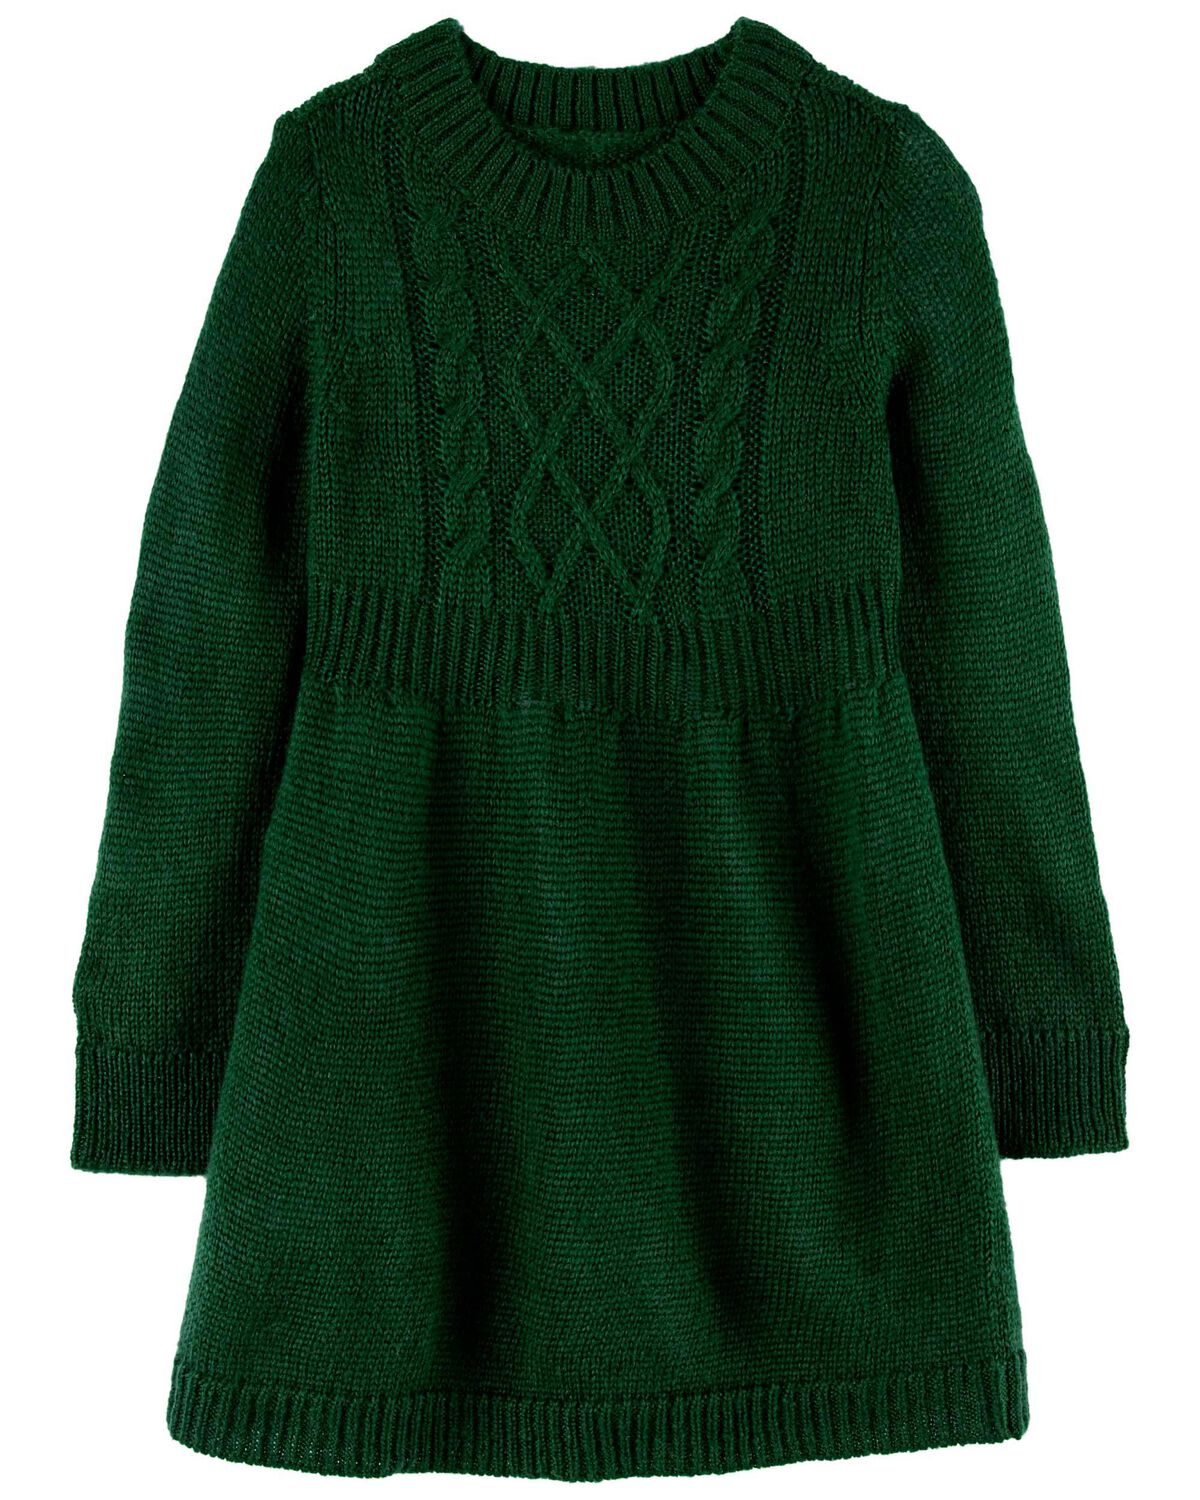 Green Toddler Long Sleeve Sweater Knit Dress | carters.com